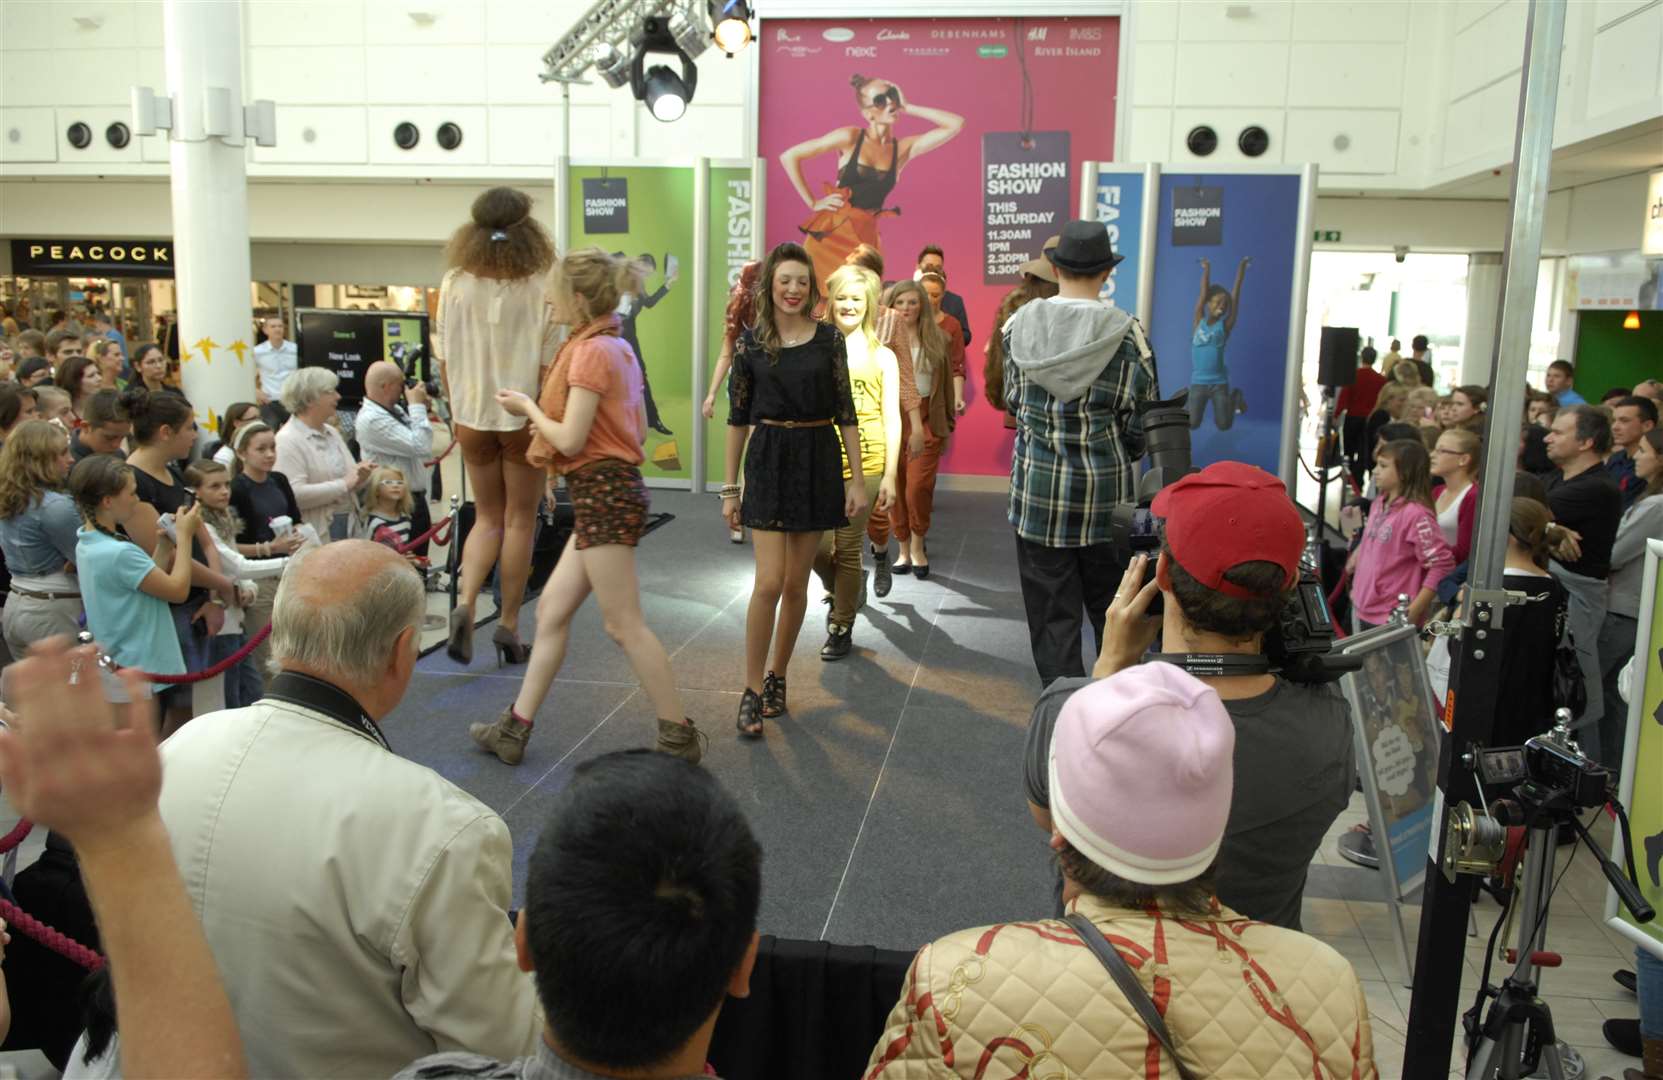 An autumn fashion show in September 2011